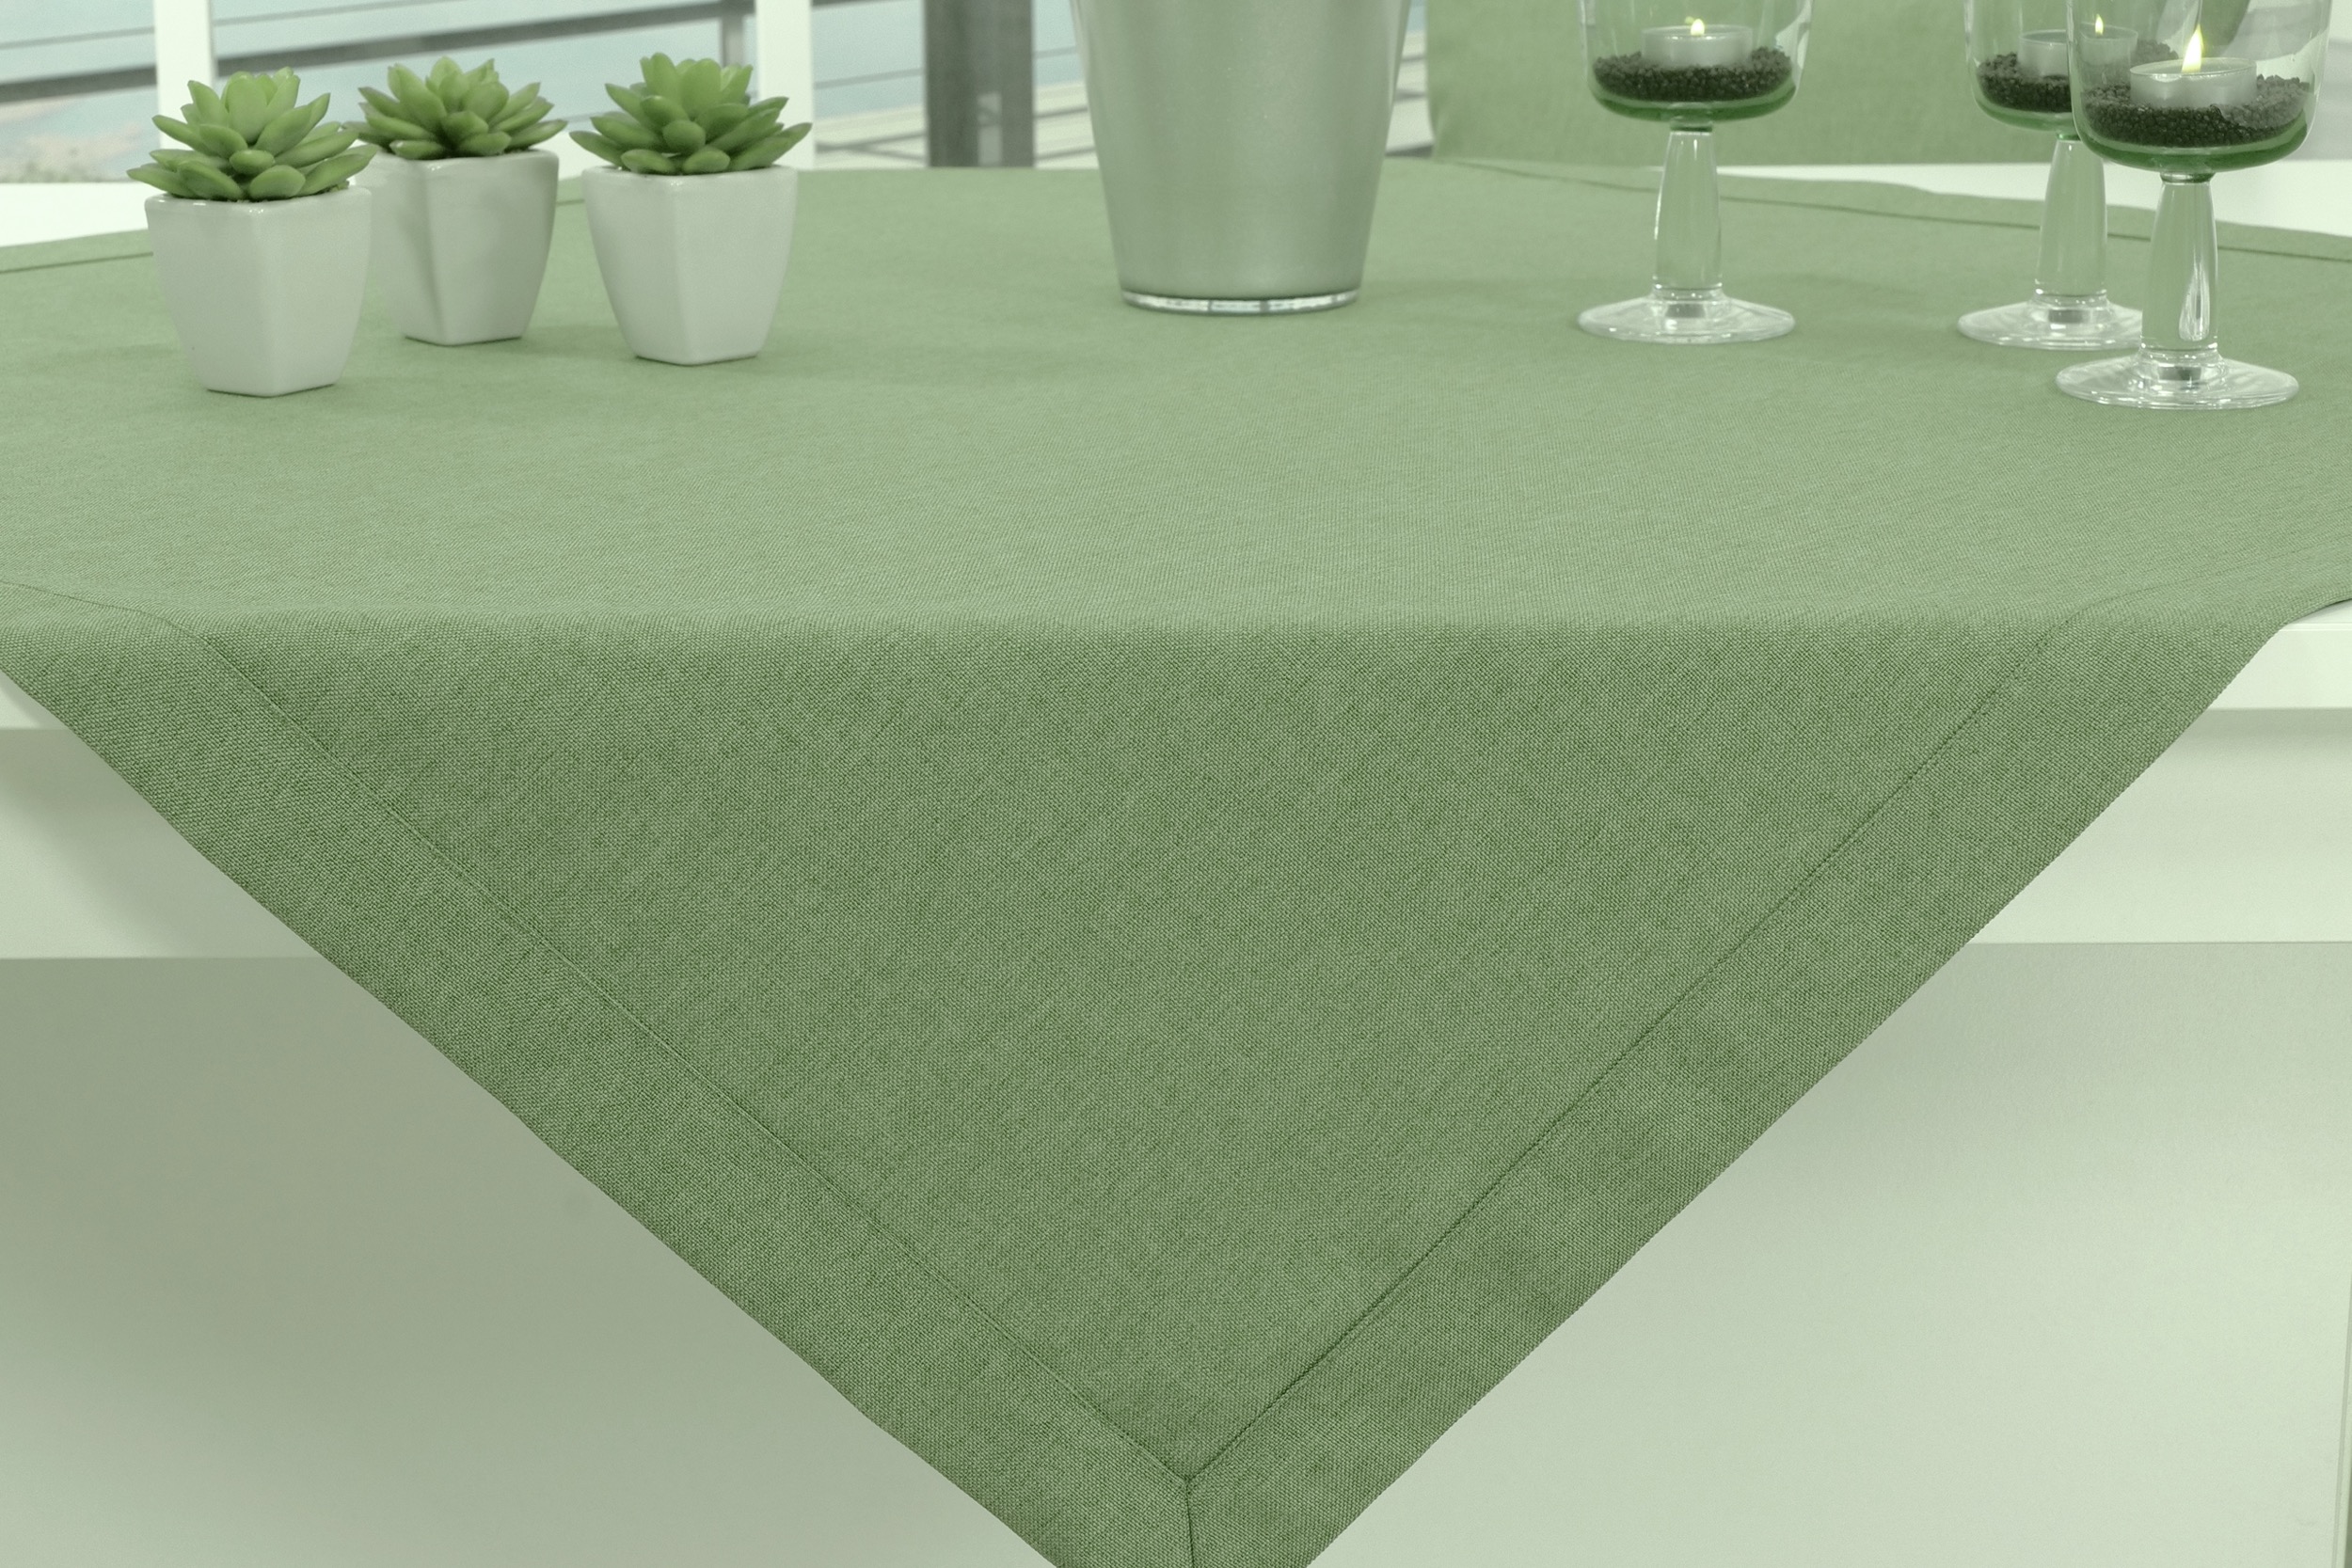 Edle Tischdecke Grün einfarbig Peony ab 80x80 cm - 200x200 cm QUADRATISCH